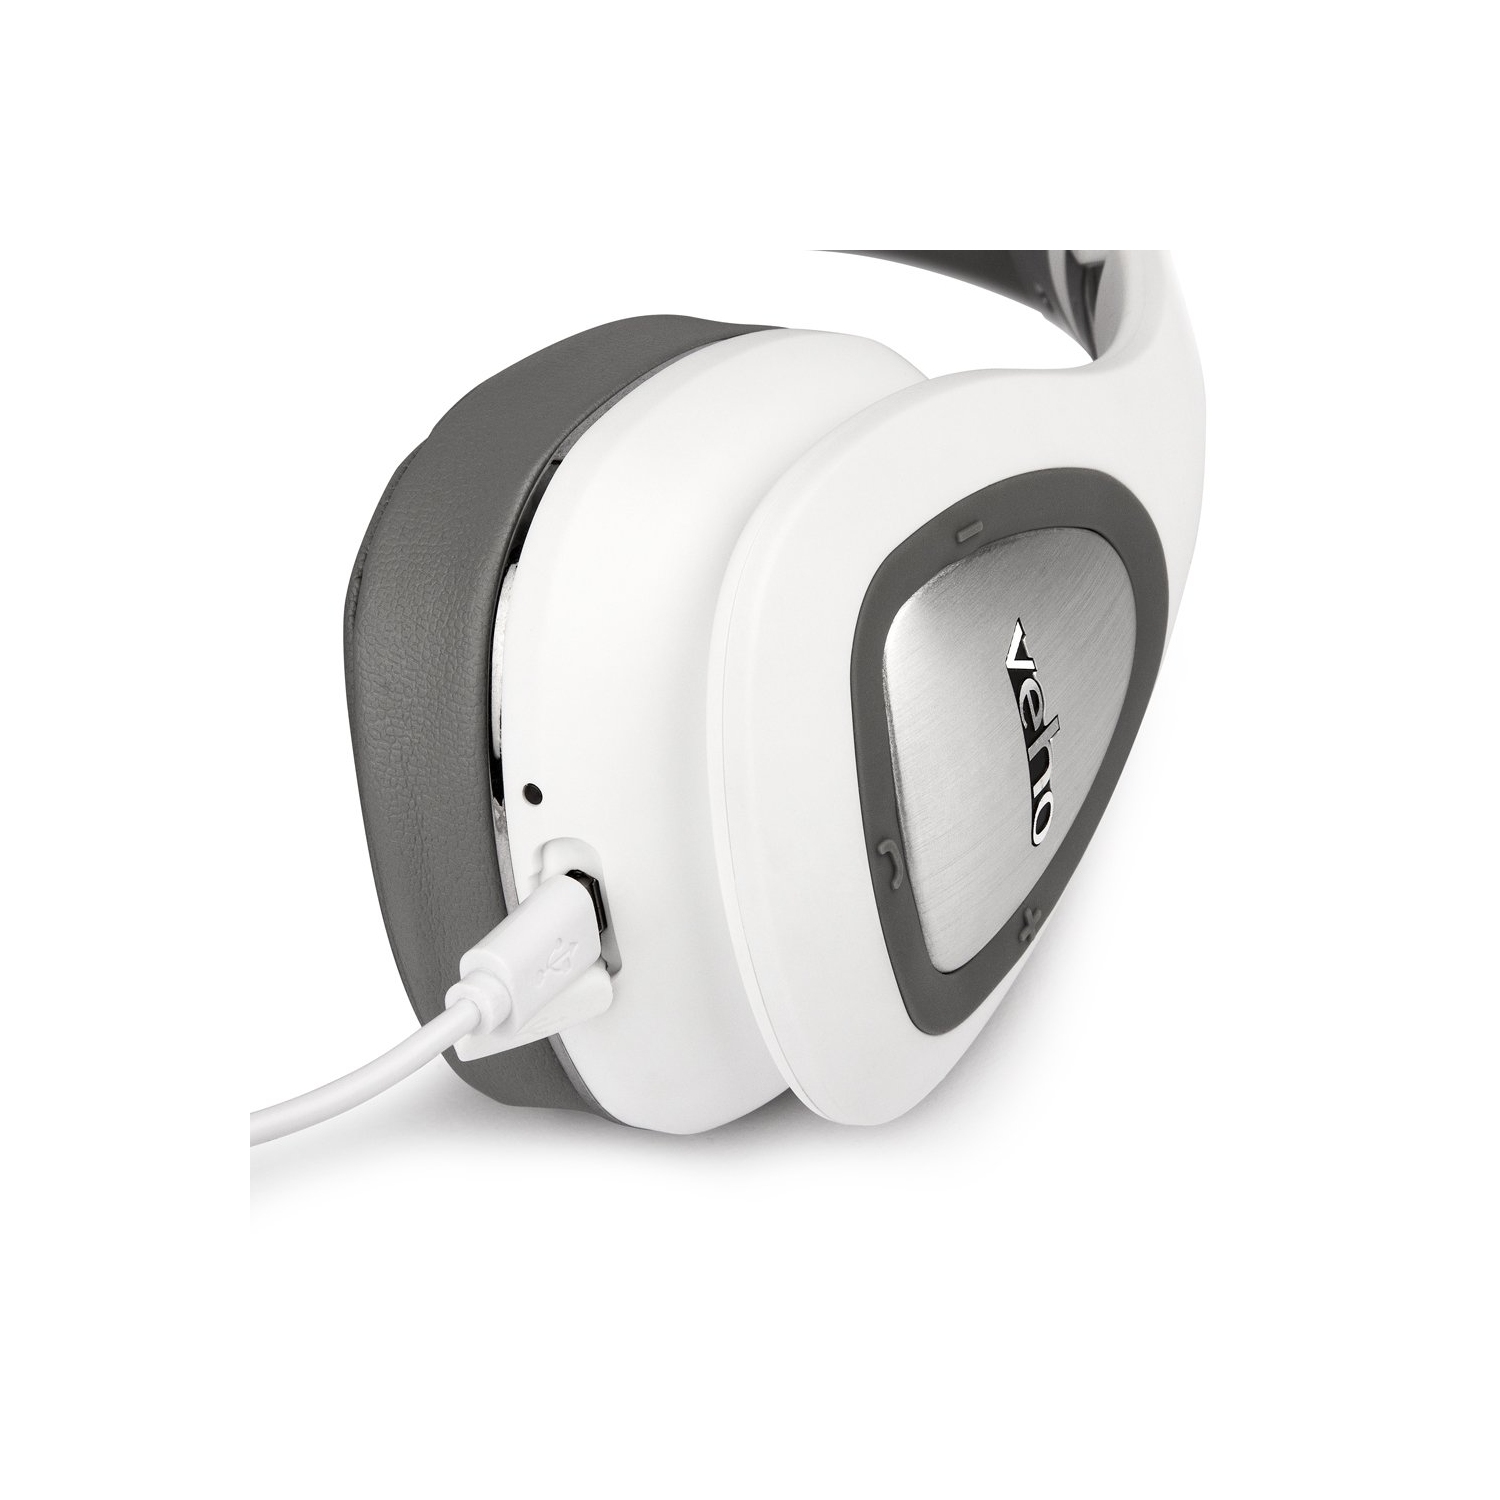 Veho ZB-6 On-Ear Wireless Foldable Bluetooth Headphones - White